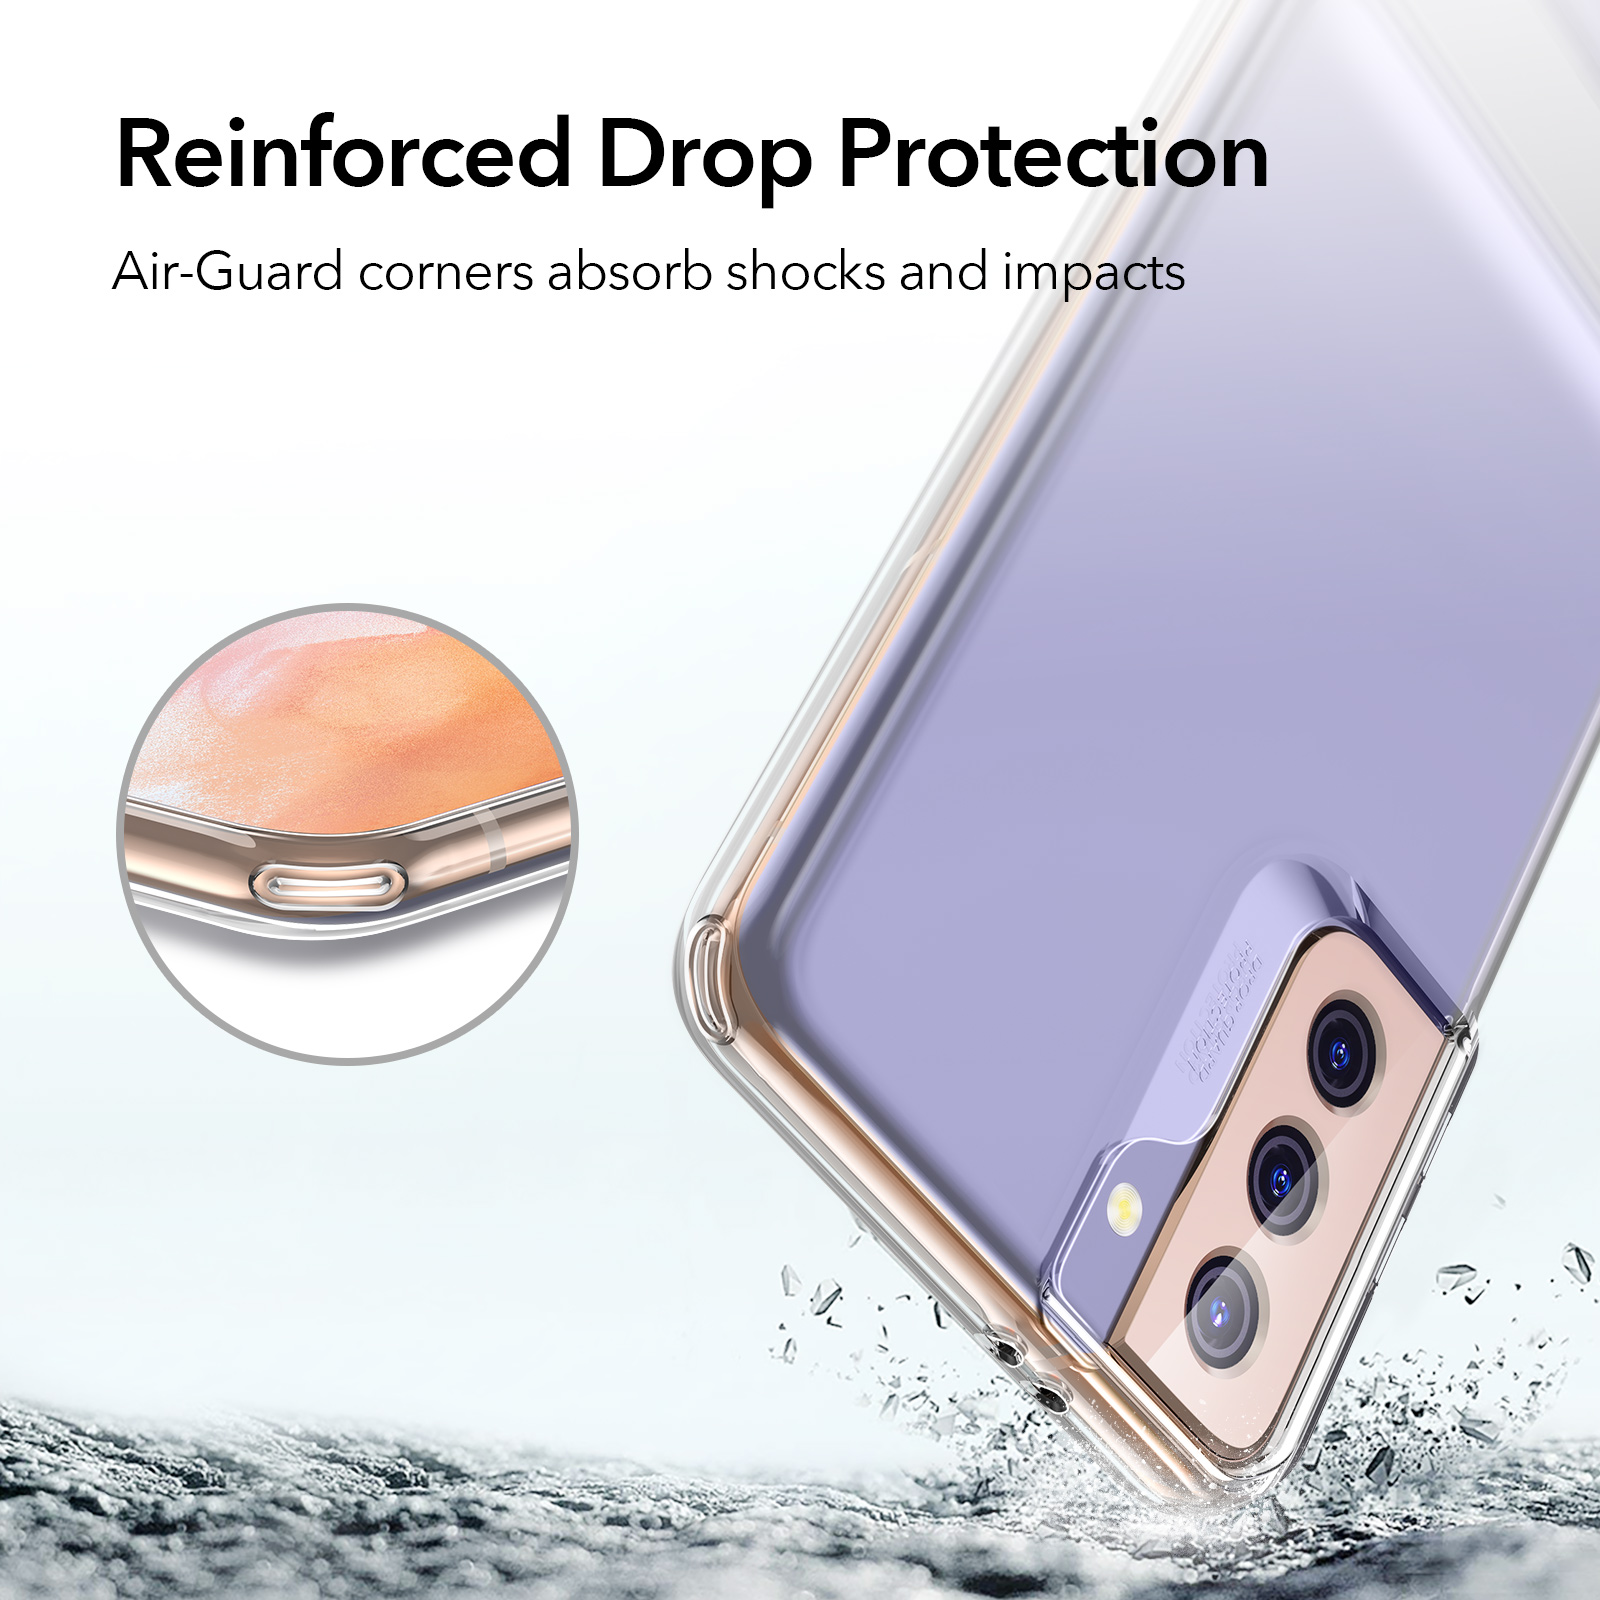 ESR Samsung Galaxy S21/S21 Ultra/S21 Plus (2021)  Metal Kickstand Phone Case For For Samsung Galaxy S21/S21 Ultra/S21 Plus Phone Case